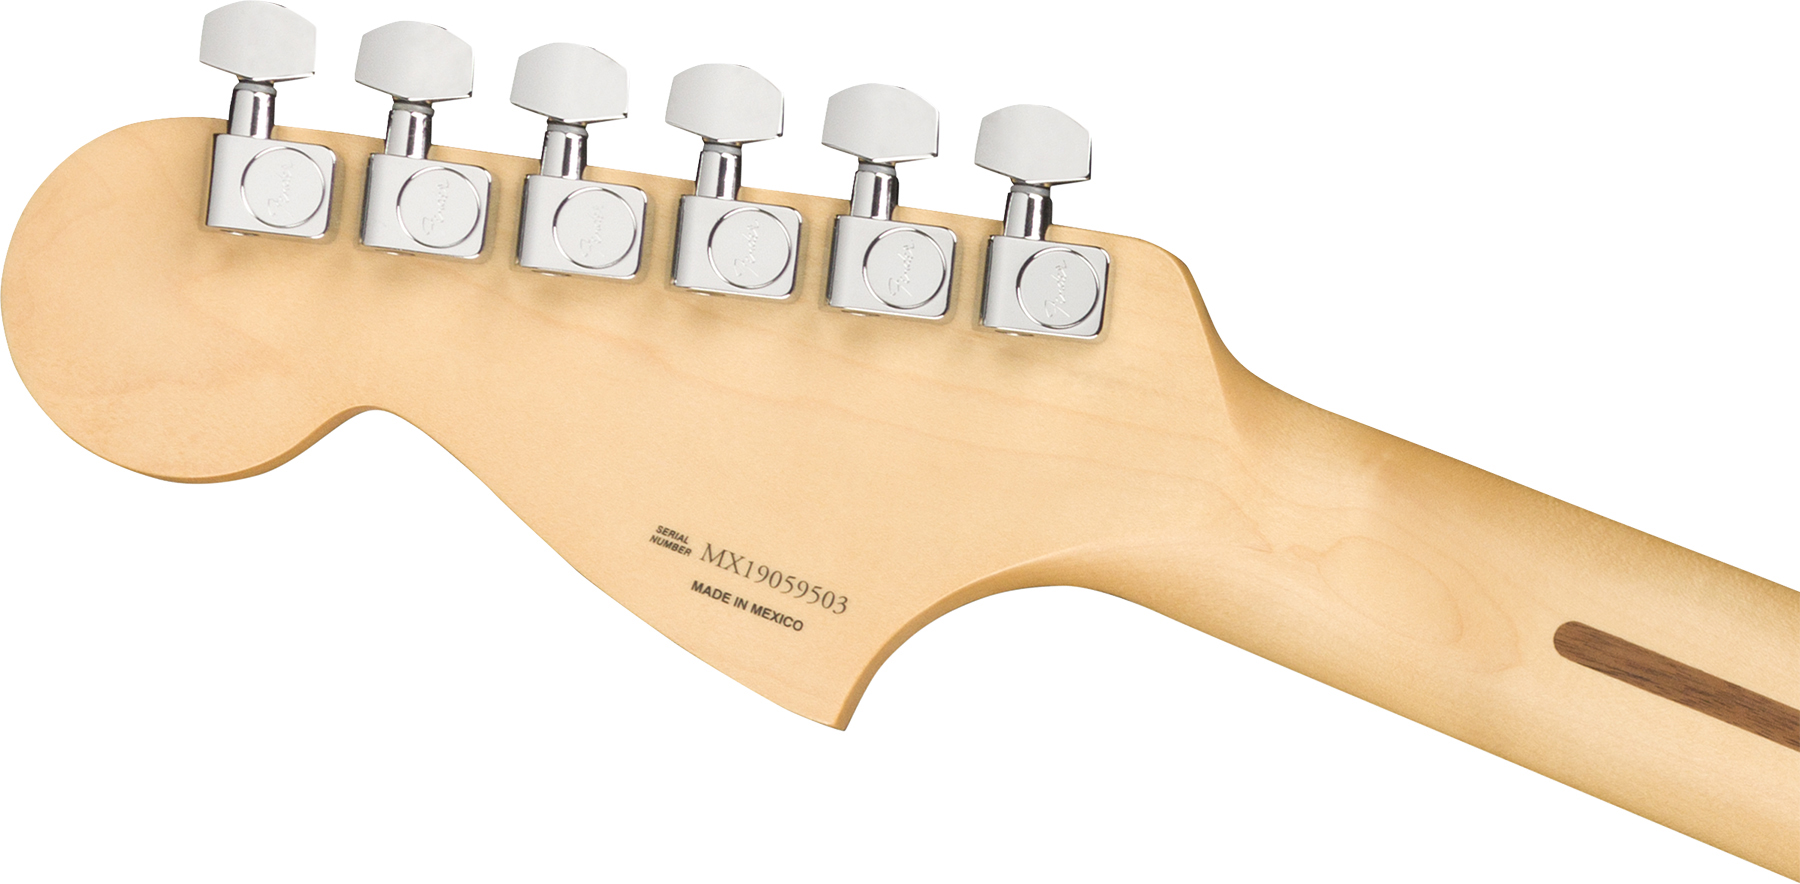 Fender Mustang Player 90 Mex Ht 2p90 Mn - Seafoam Green - Retro rock electric guitar - Variation 3